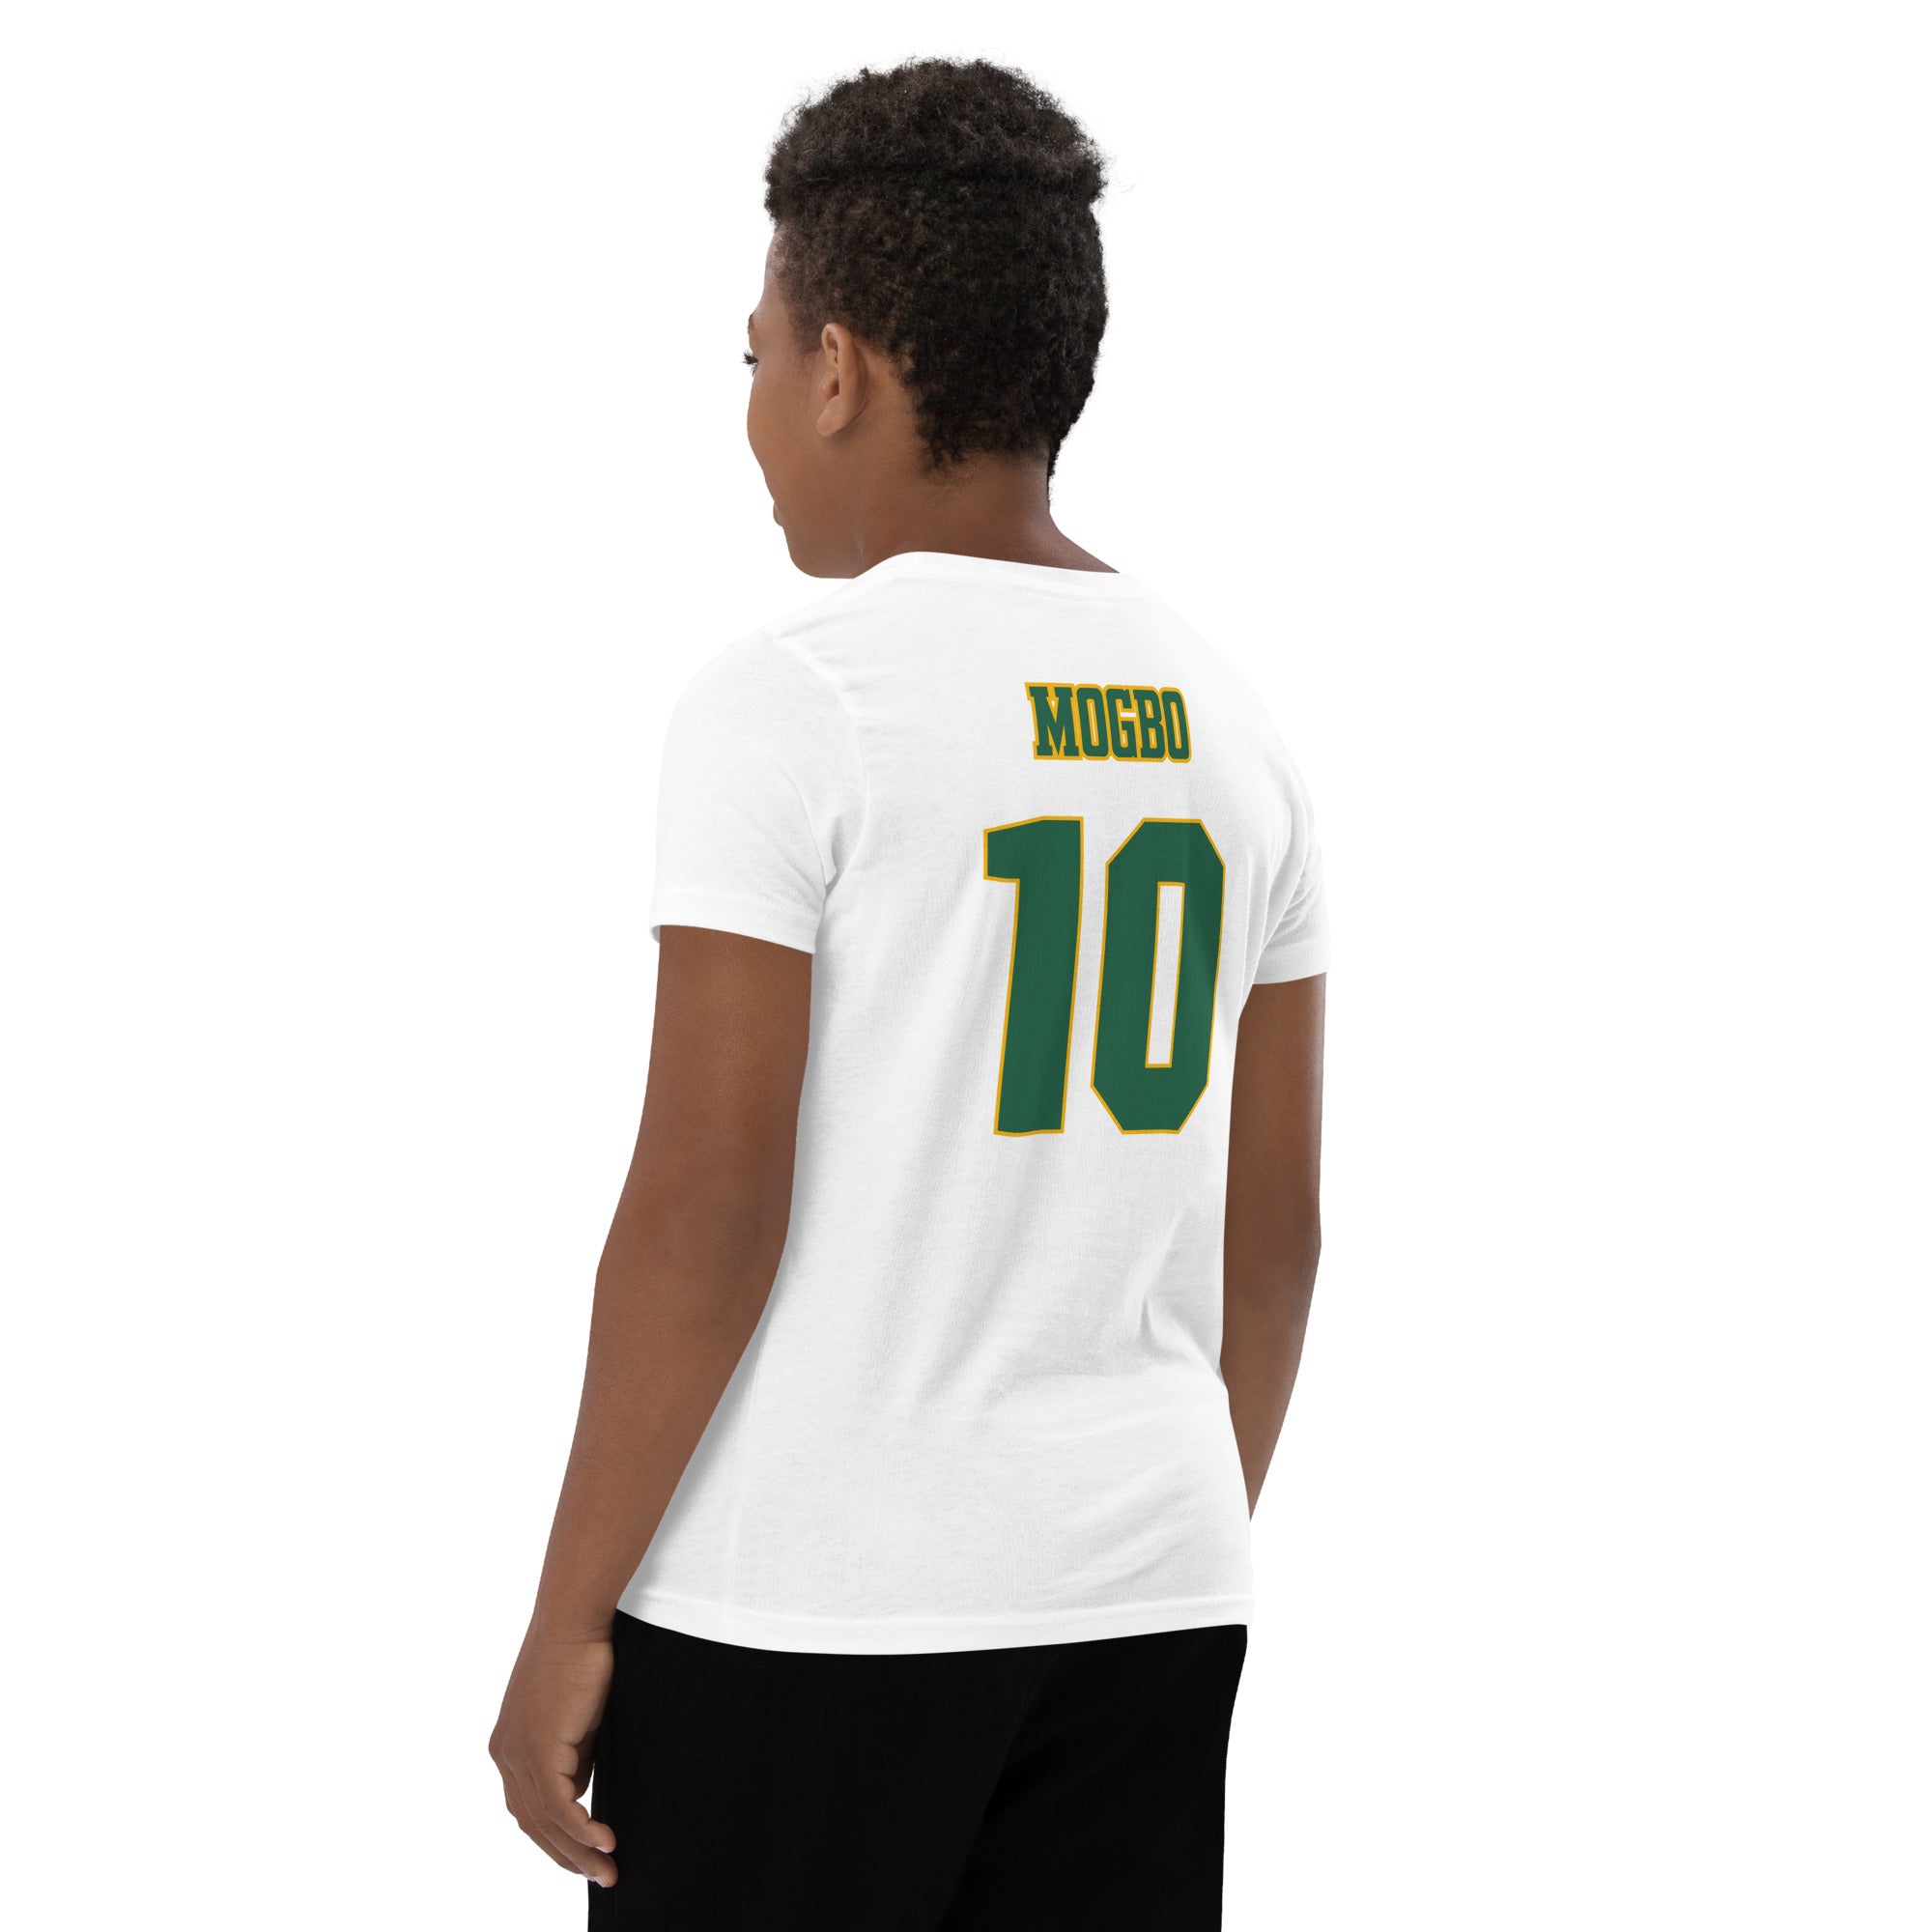 Jonathan Mogbo #10 Youth Short Sleeve T-Shirt